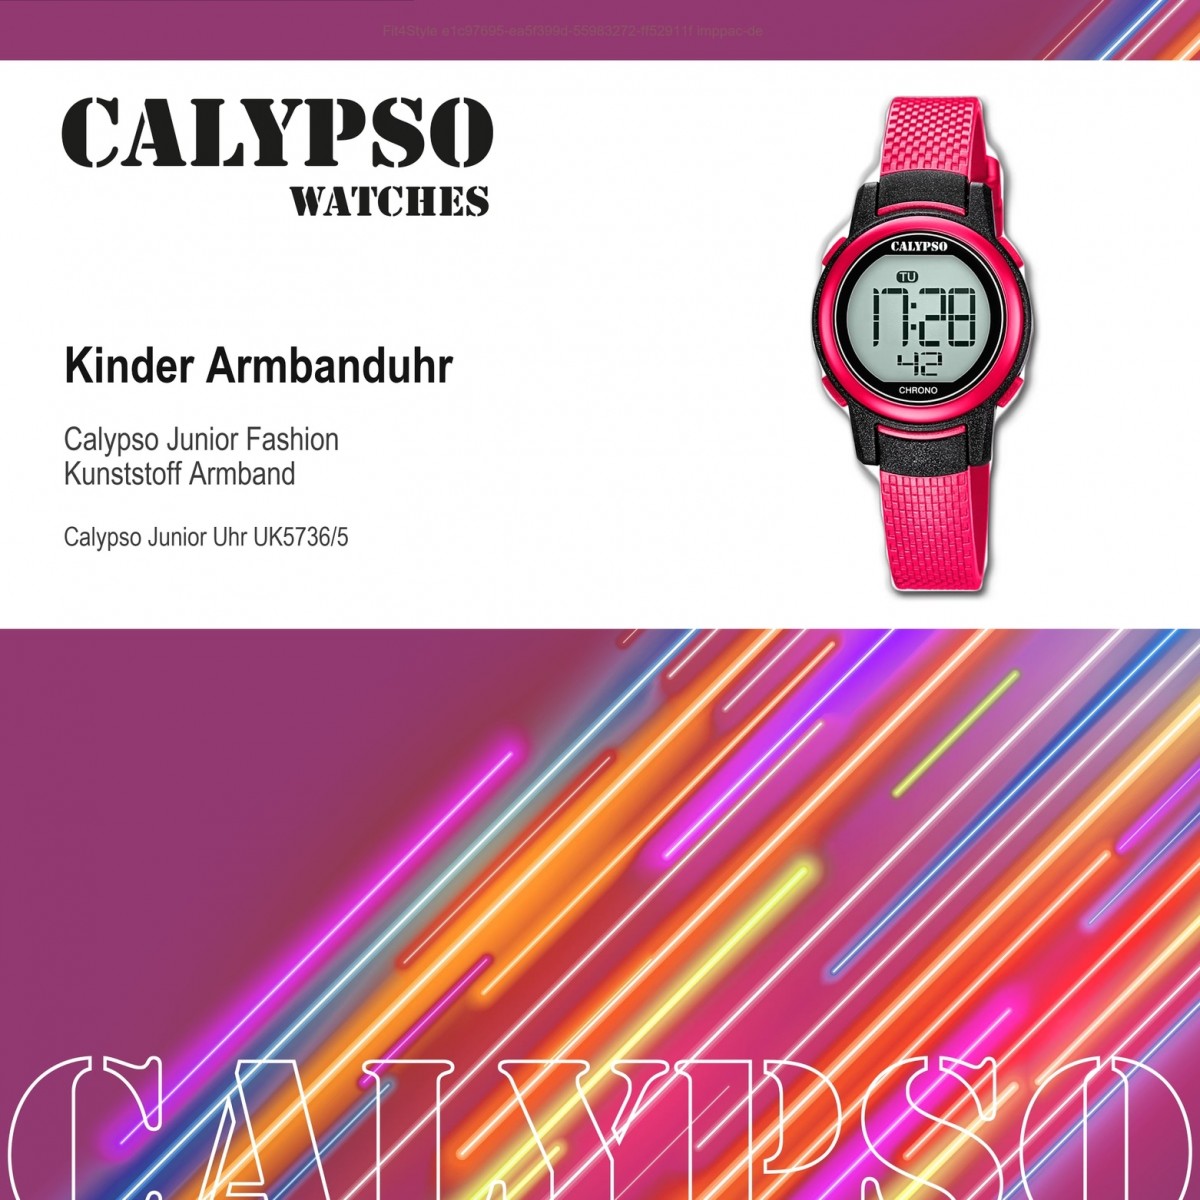 Calypso Kinder Armbanduhr Digital Crush K5736/5 Quarz-Uhr PU pink UK5736/5